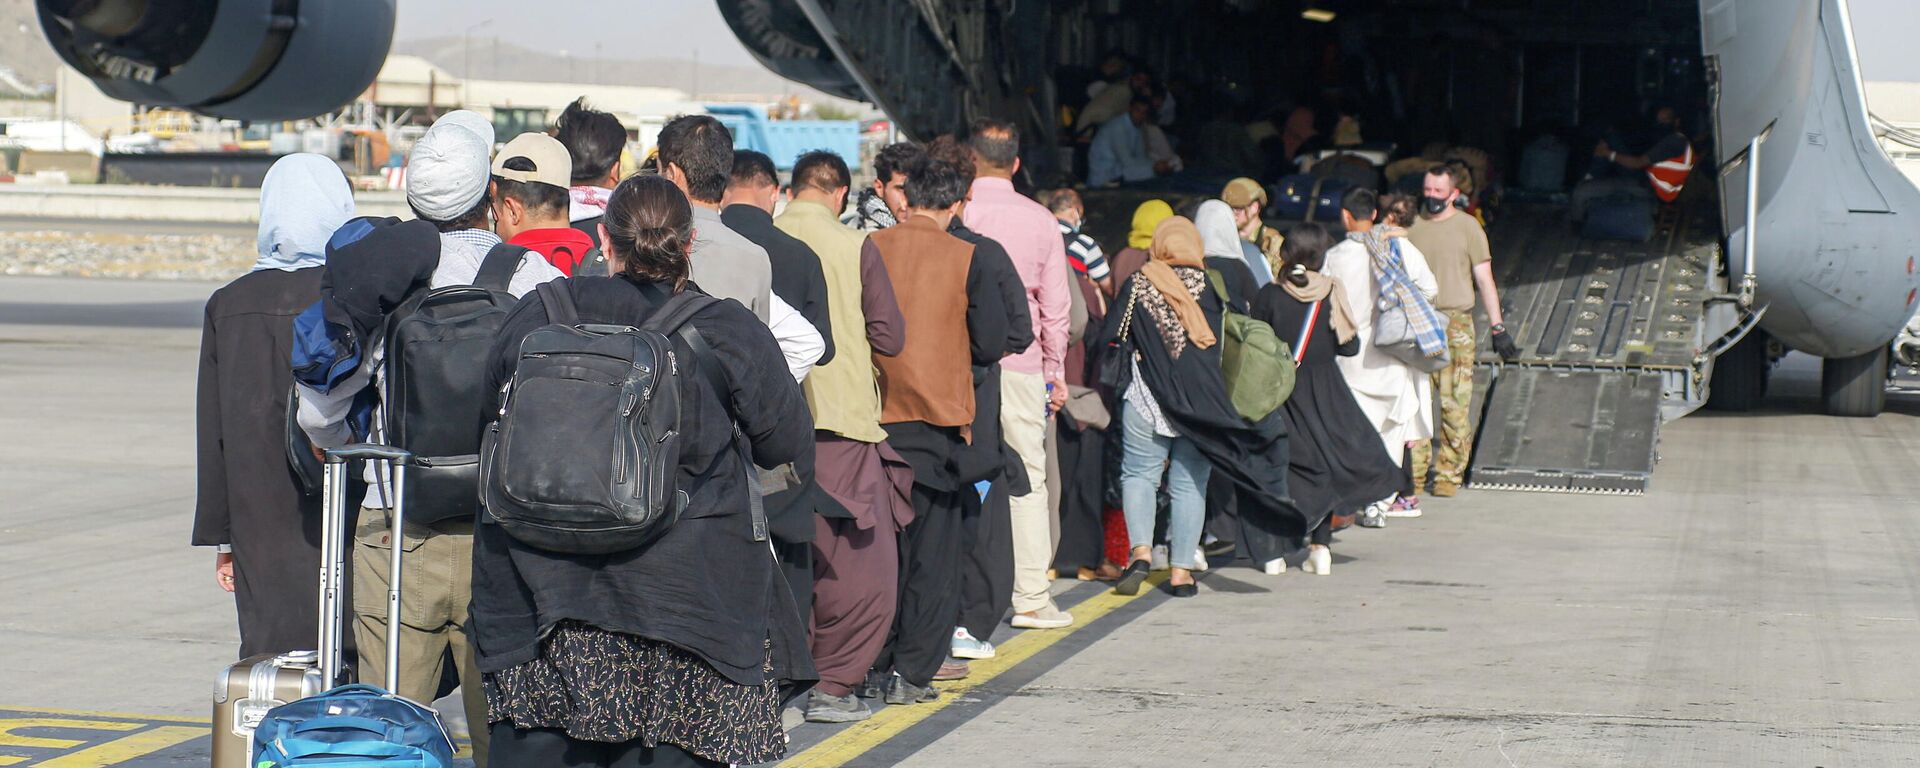 Беженцы в аэропорту Кабула - Sputnik Ўзбекистон, 1920, 01.09.2021